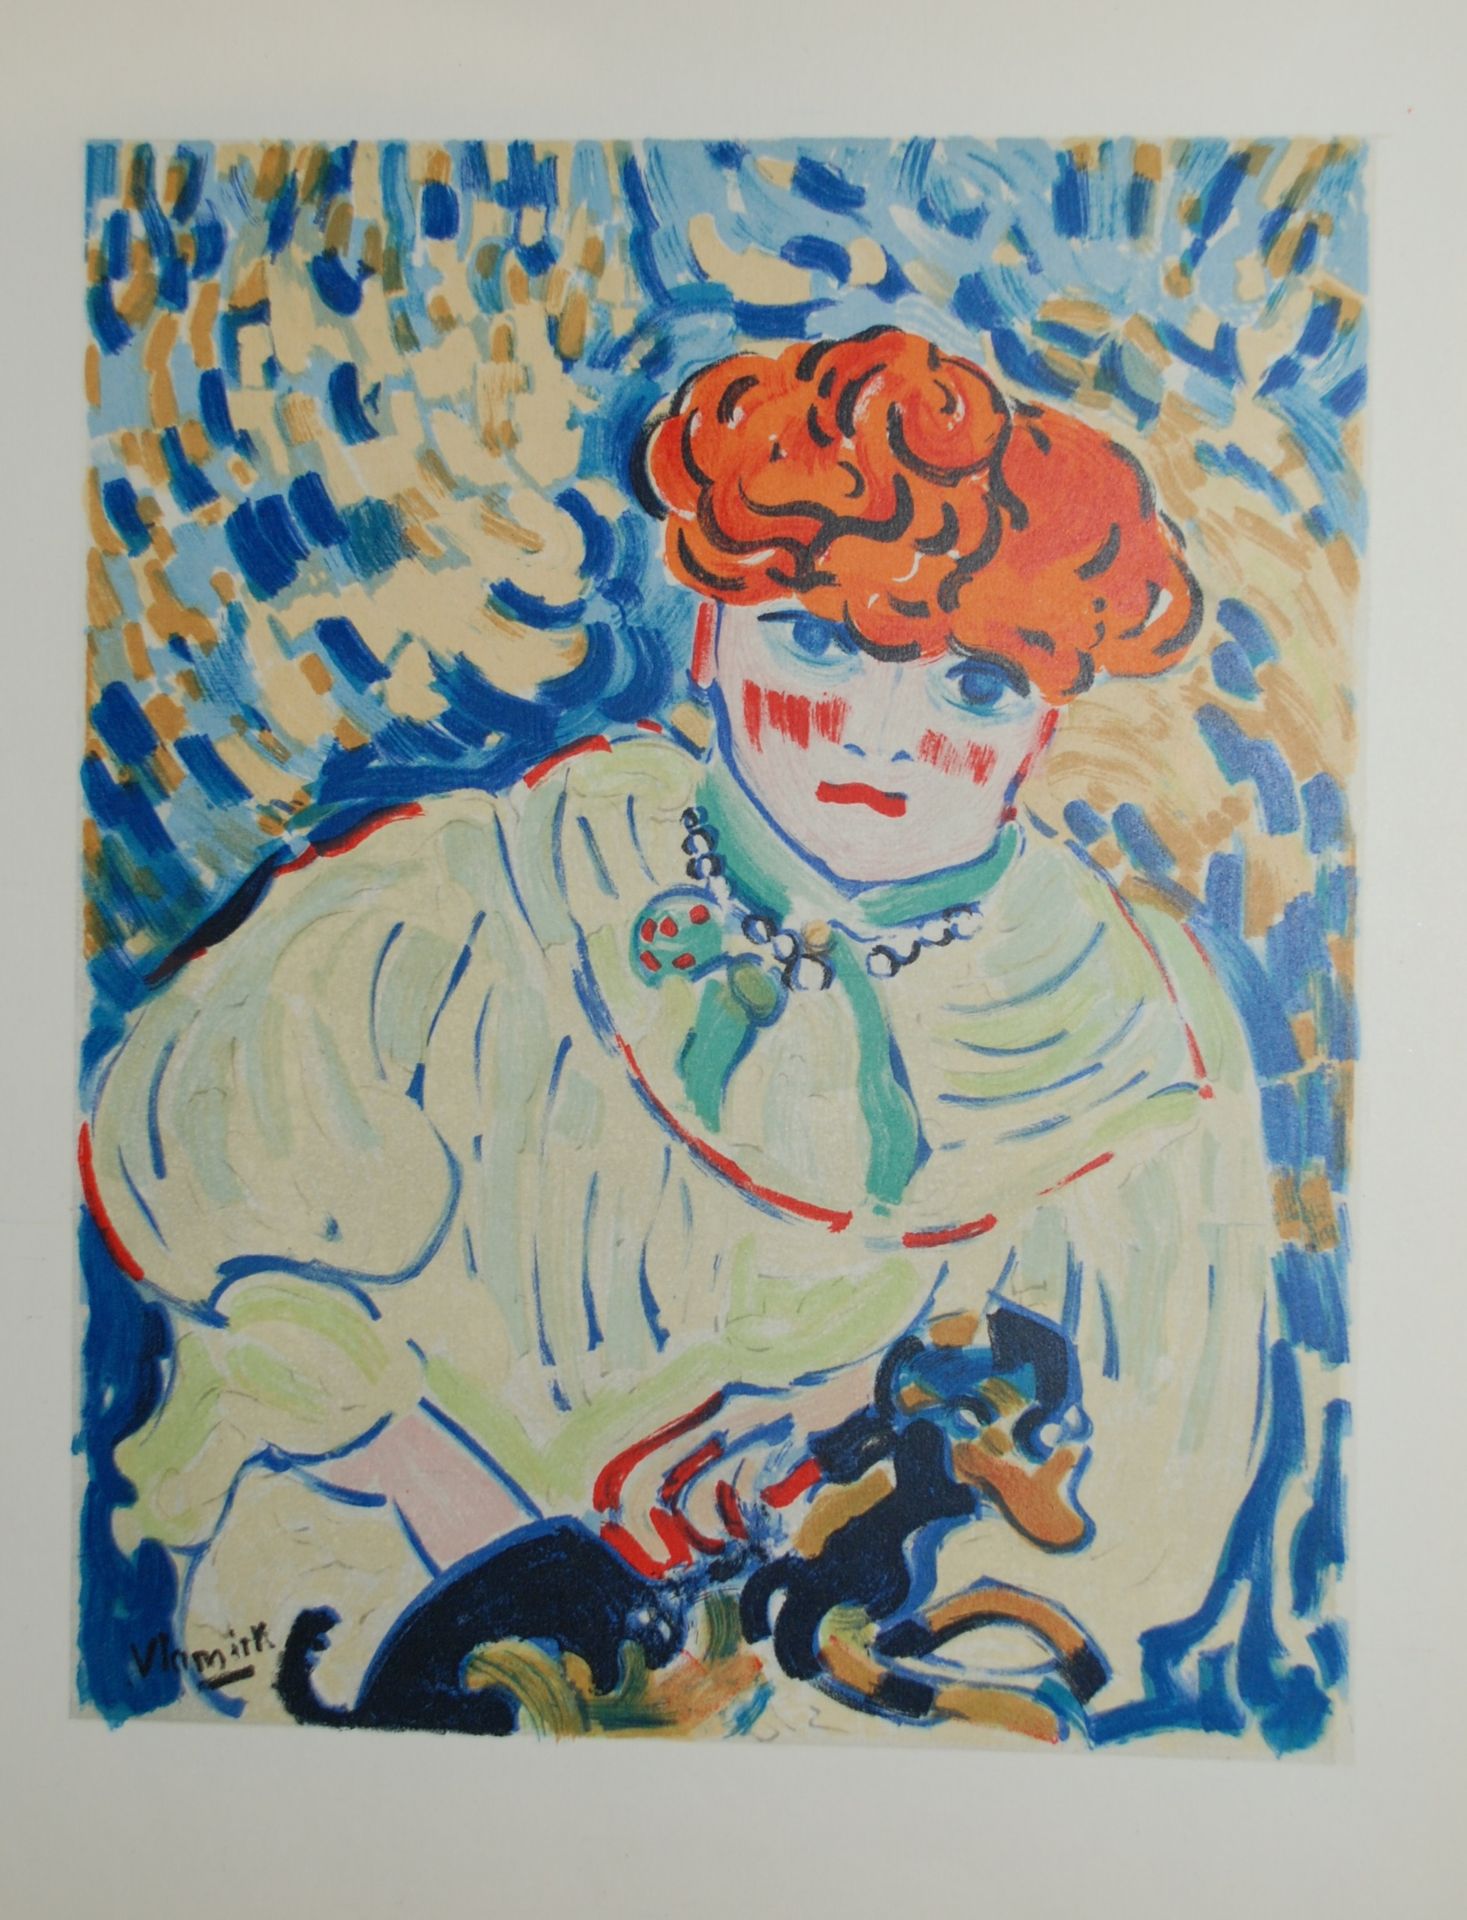 MAURICE DE VLAMINCK Maurice De Vlaminck - Frau mit Hund

Lithographie in 15 Farb&hellip;